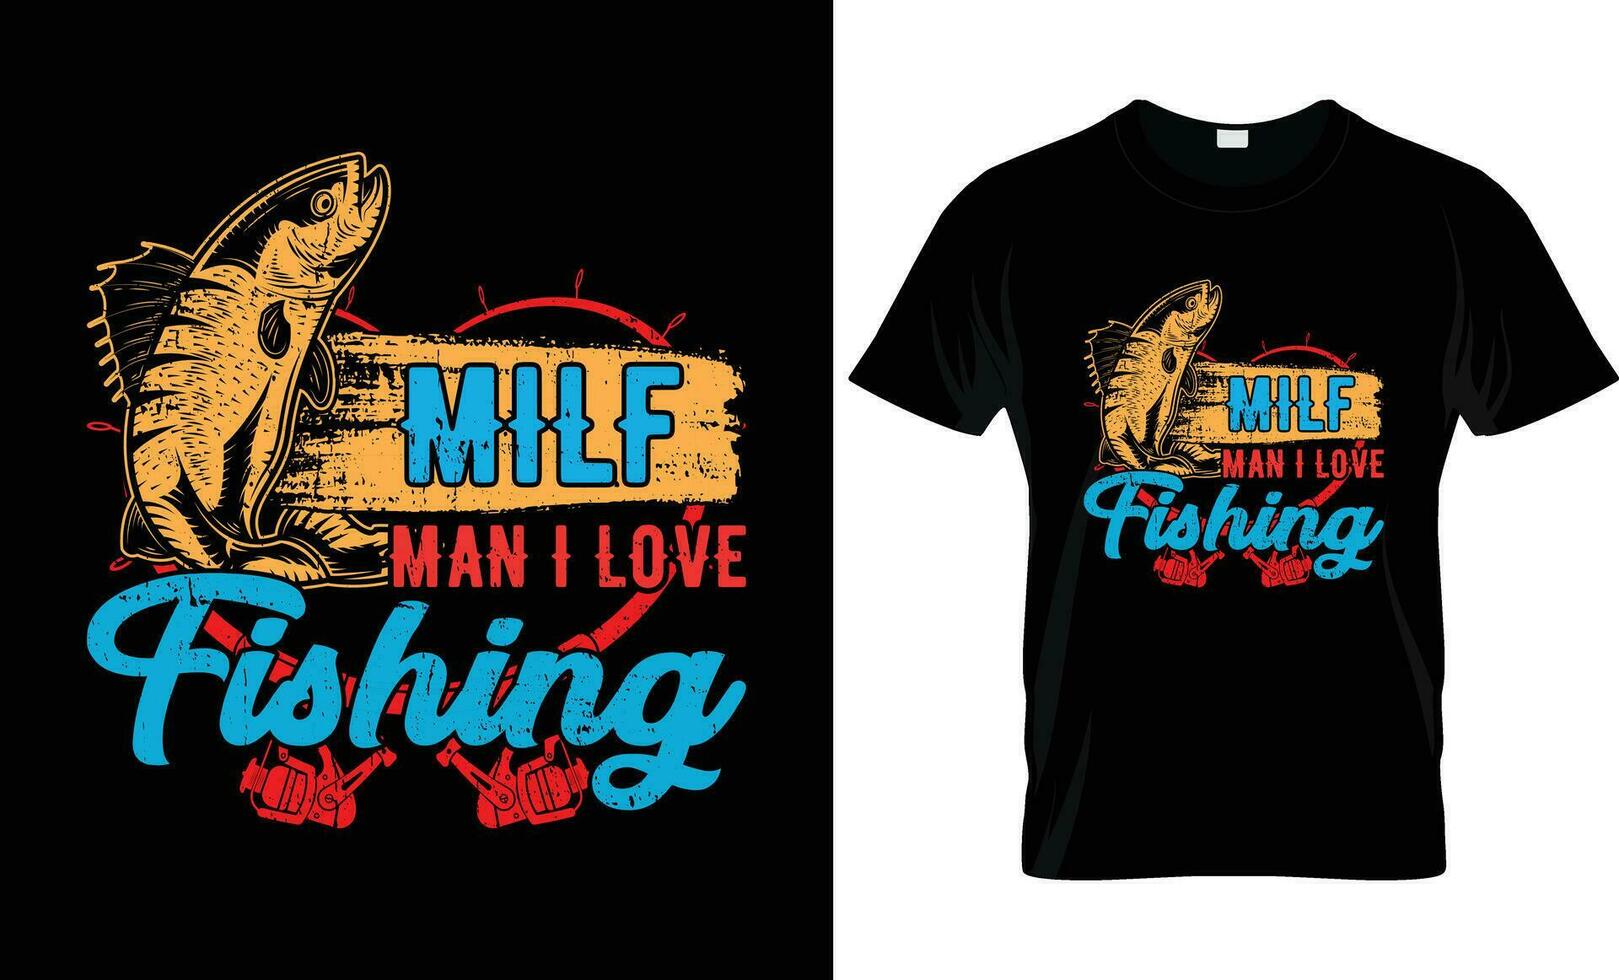 Fishing  T-Shirt Design Templates vector